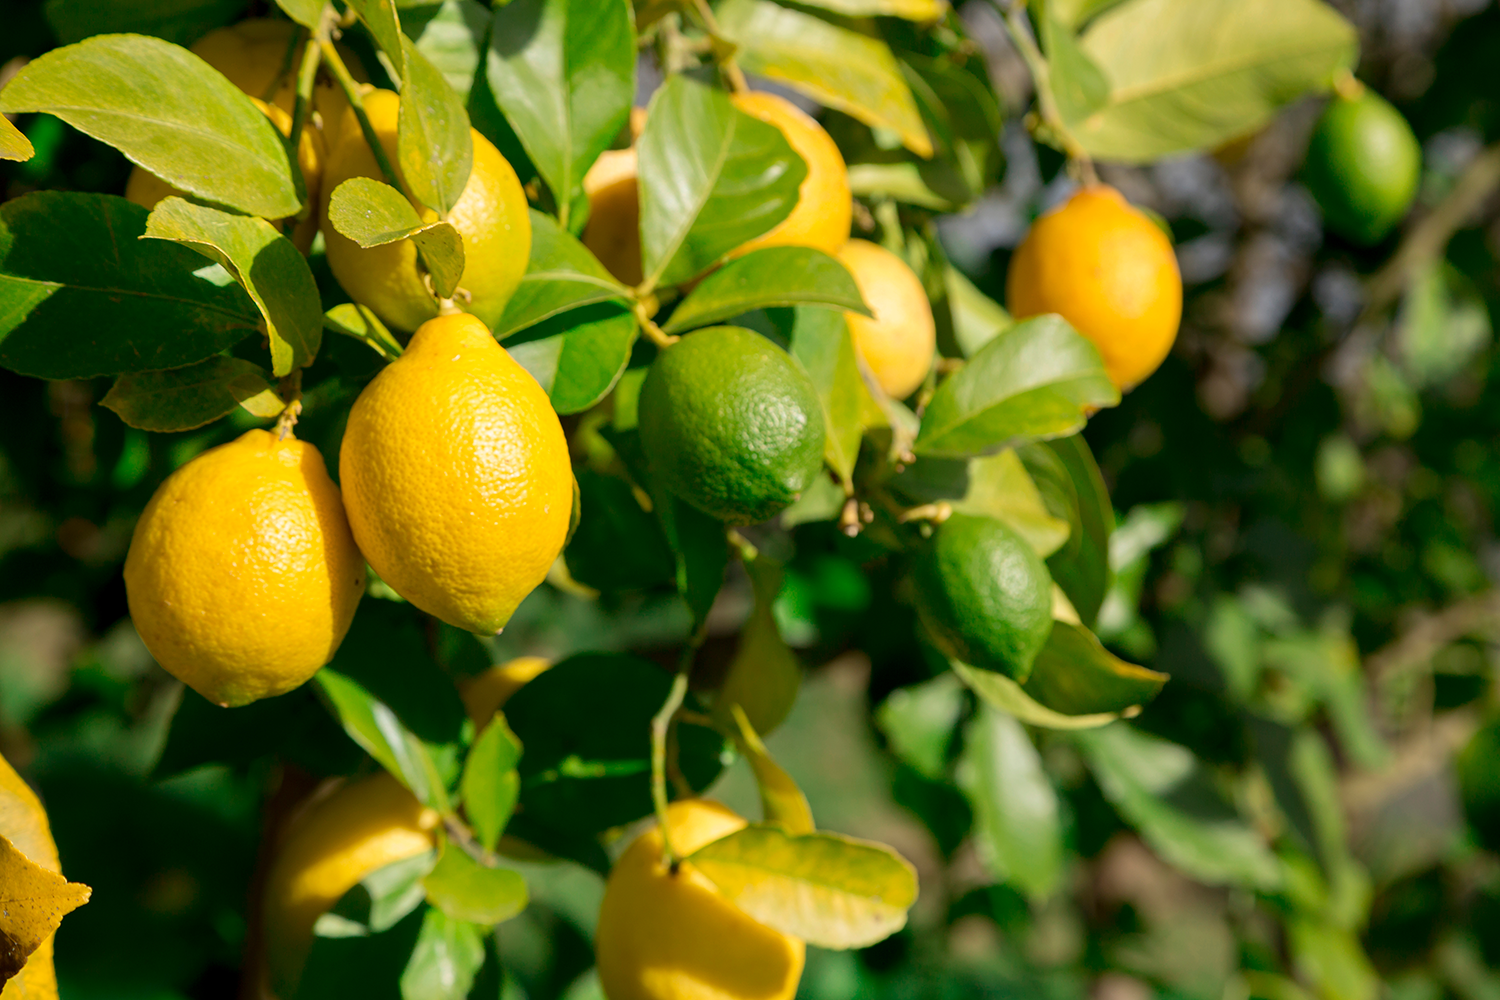 Citrus Lemon Indoor Tree - Green/Yellow Fruits - Fruit Bearing Plants